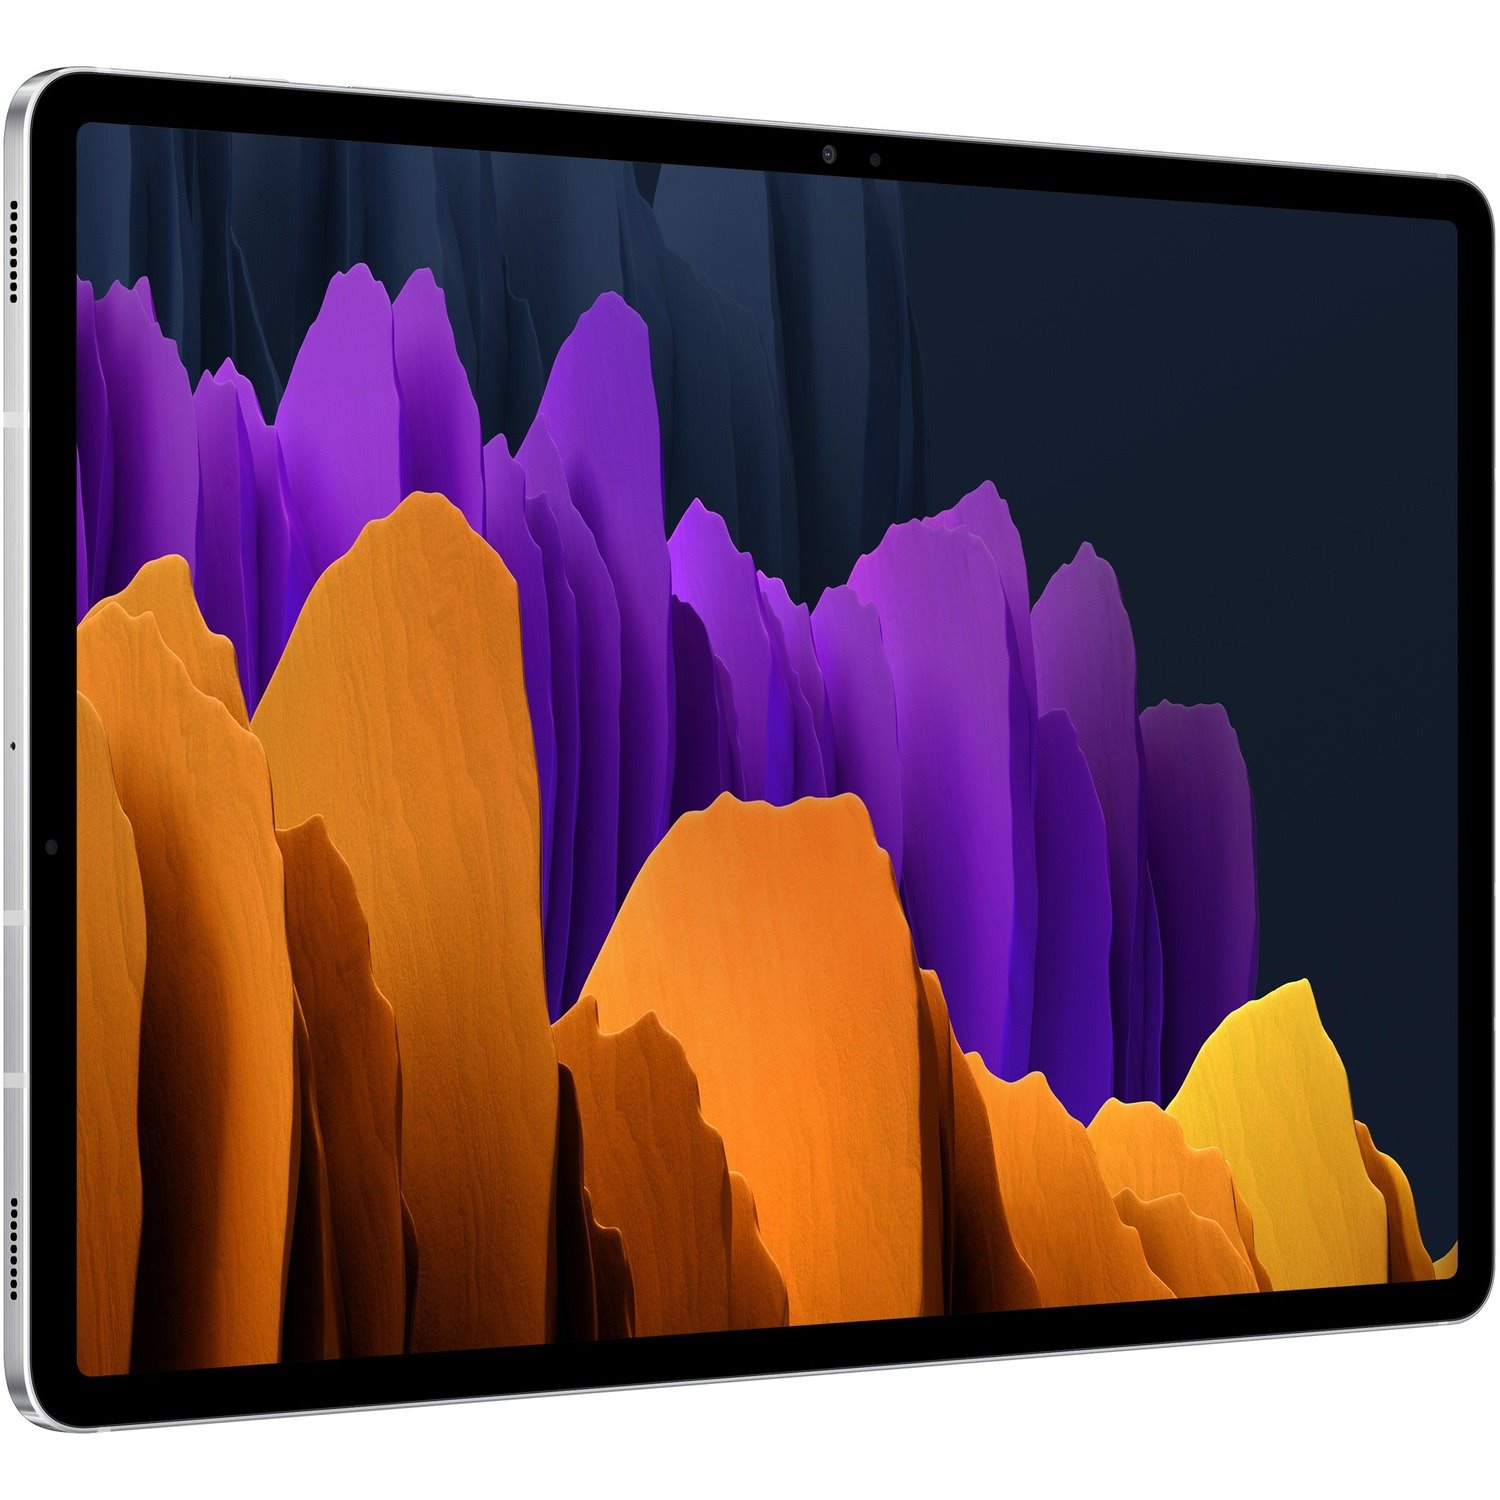 Samsung Galaxy Tab S7+ SM-T970 Tablet - 12.4" WQXGA+ - Qualcomm Snapdragon 865 Plus - 6 GB - 128 GB Storage - Android 10 - Mystic Silver